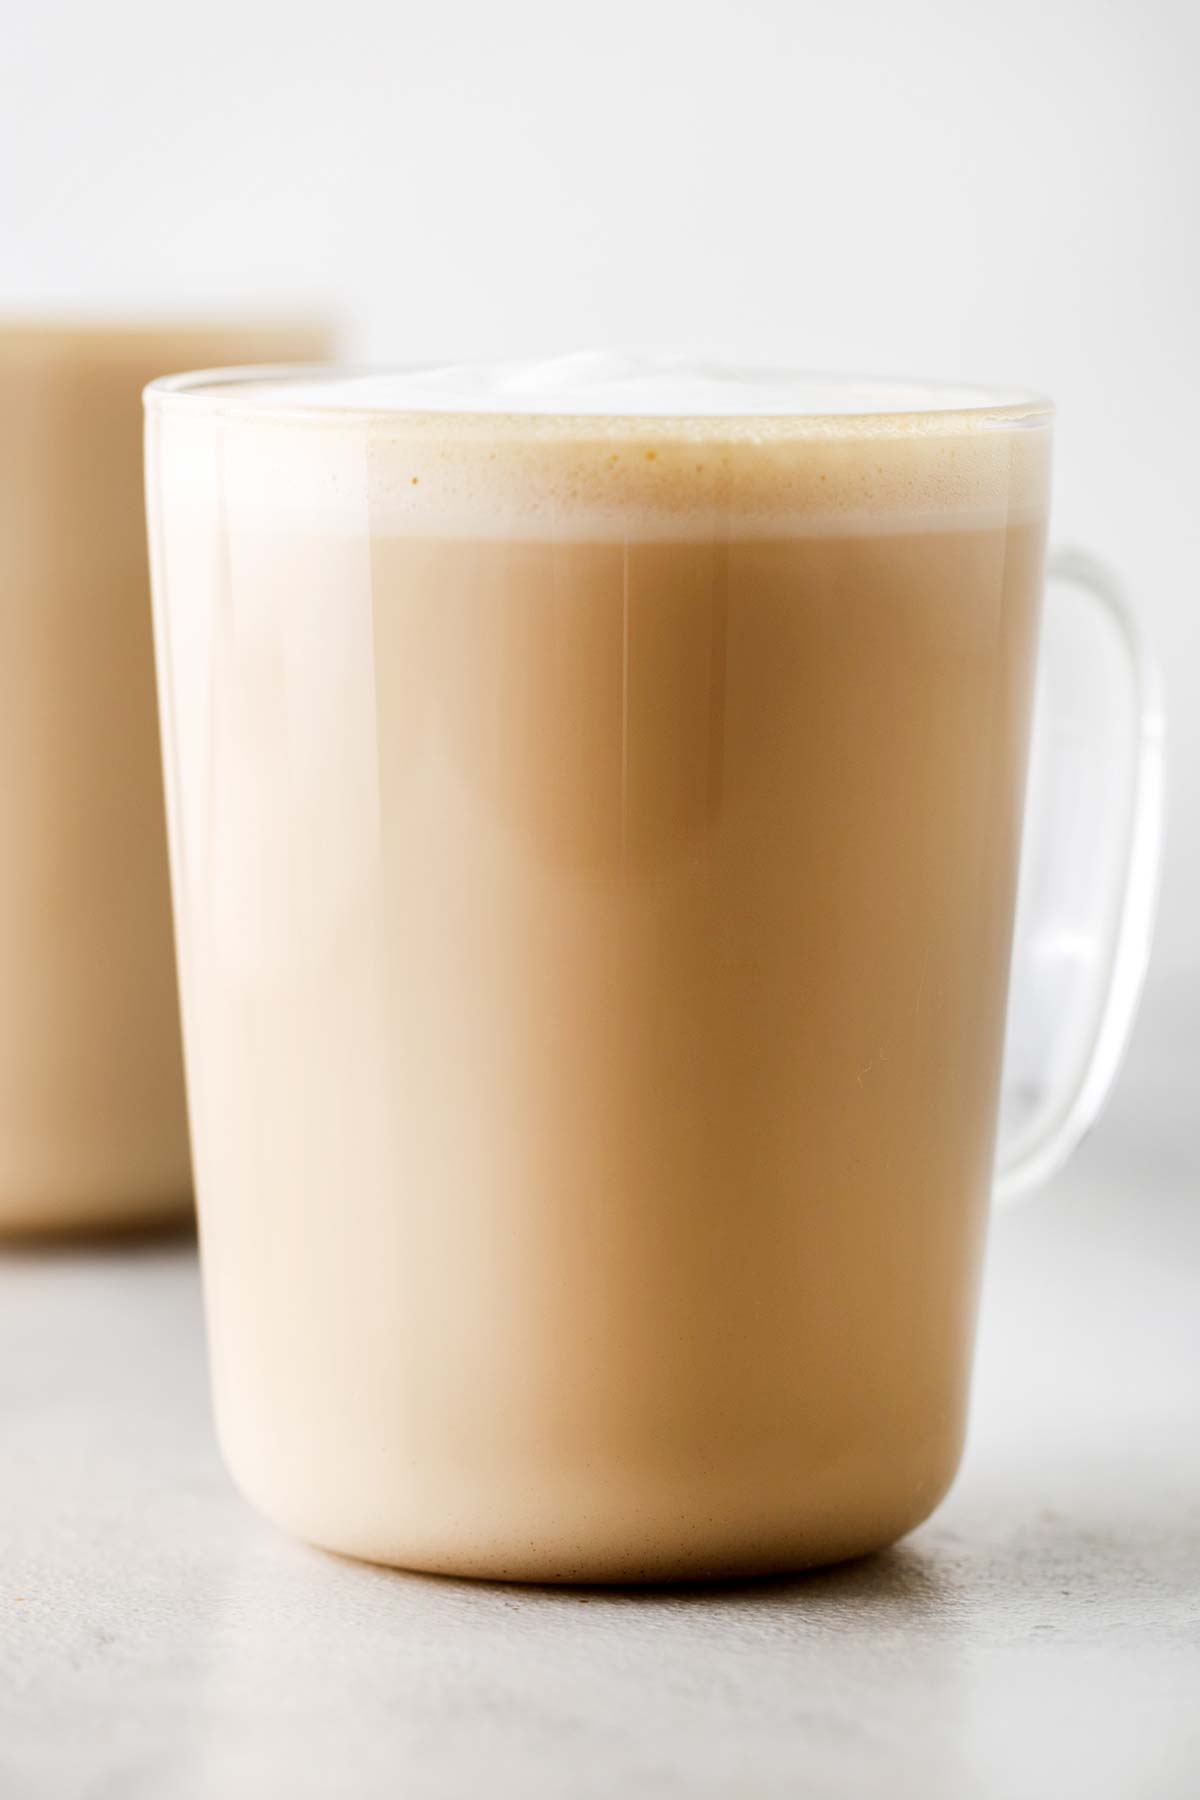 Starbucks Vanilla Latte drink in a clear glass mug.